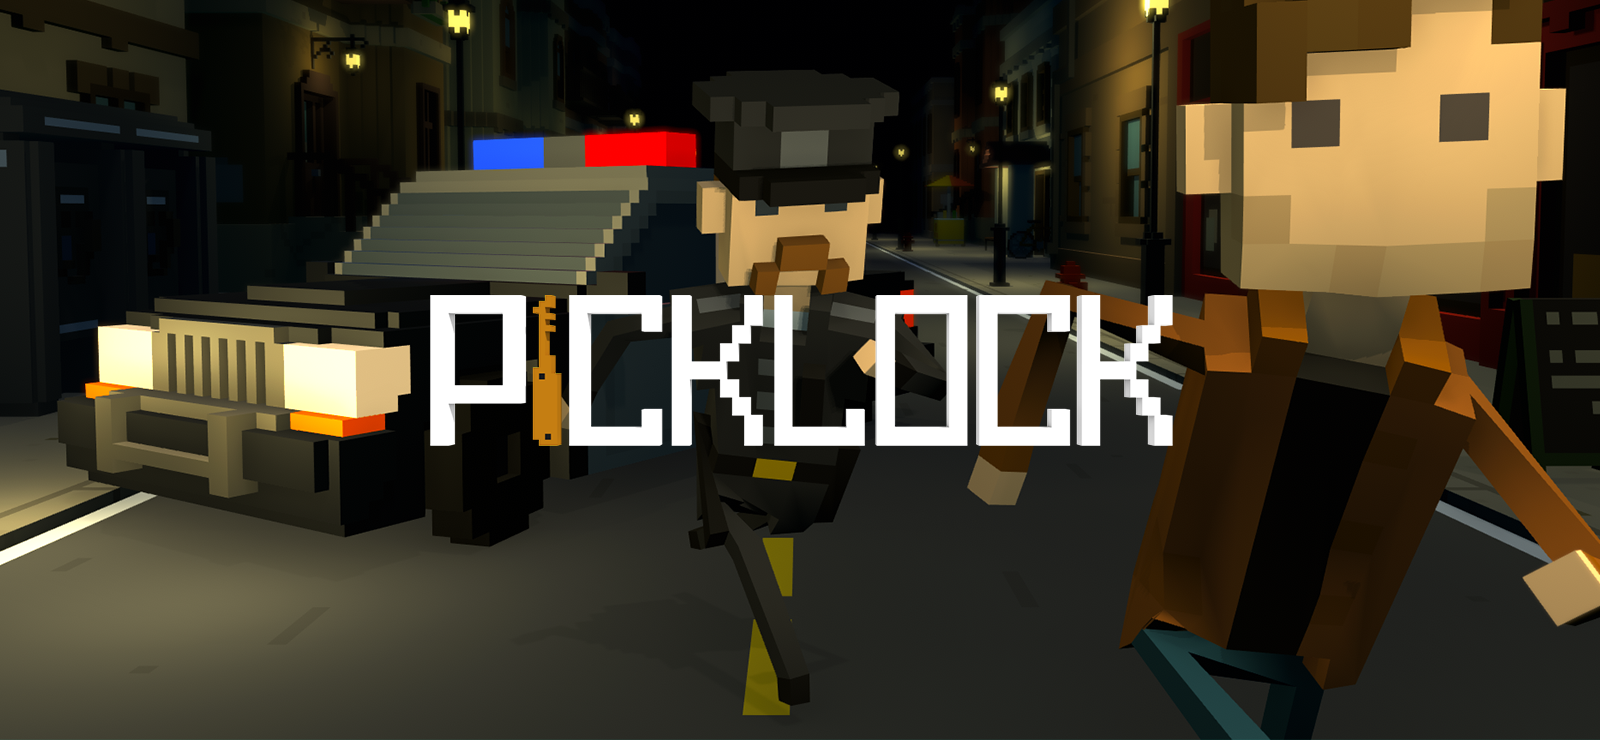 Picklock